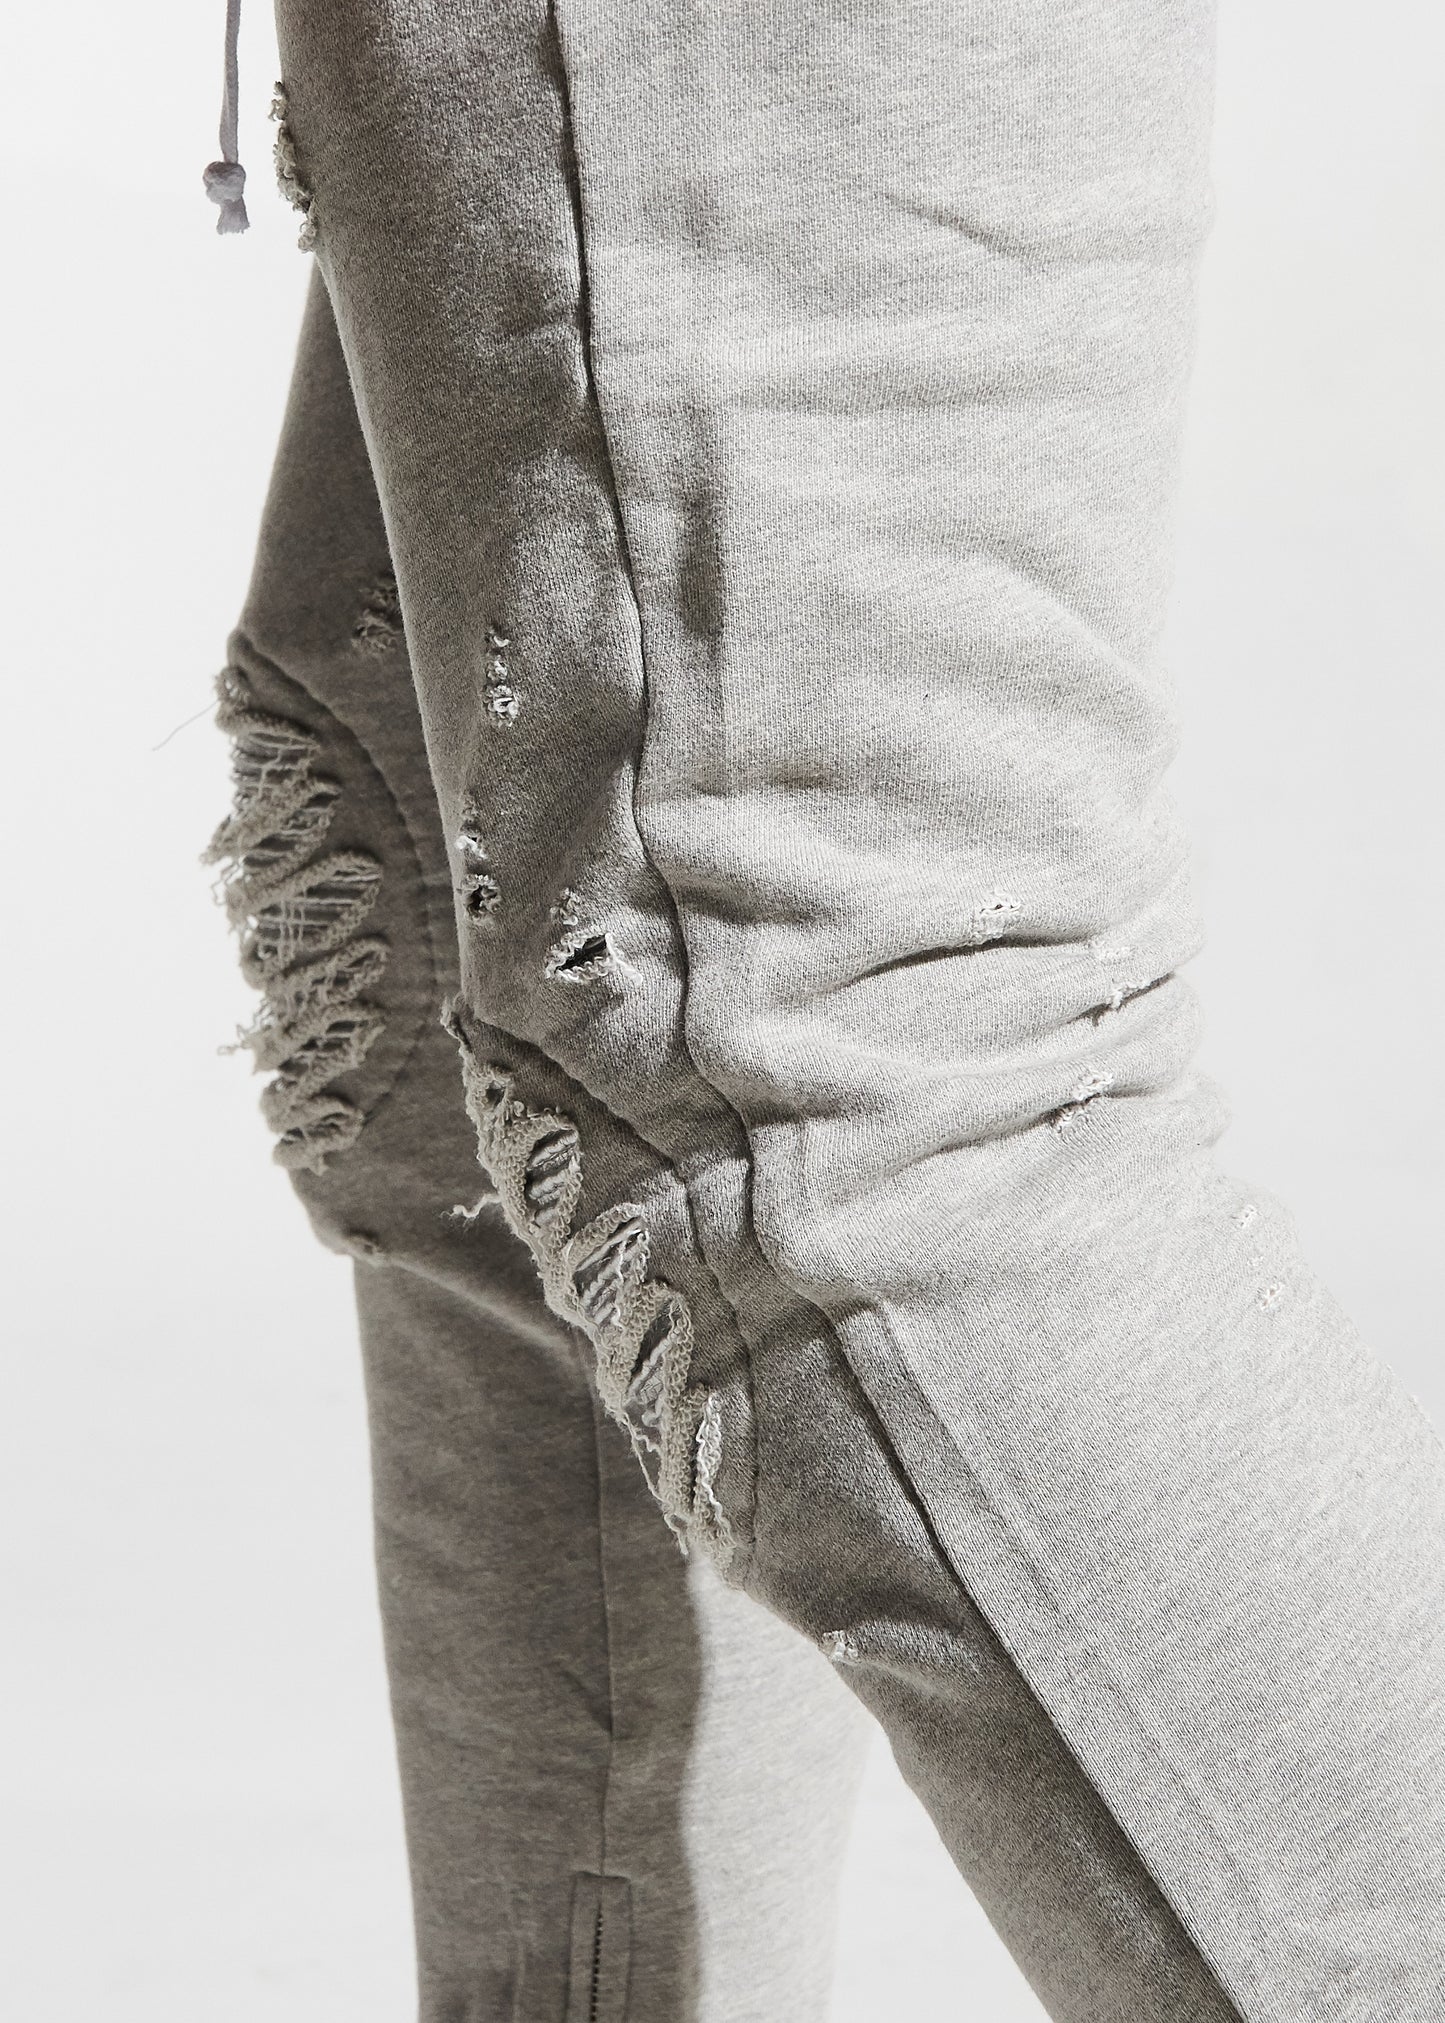 Walsh Sweatpants (Grey)